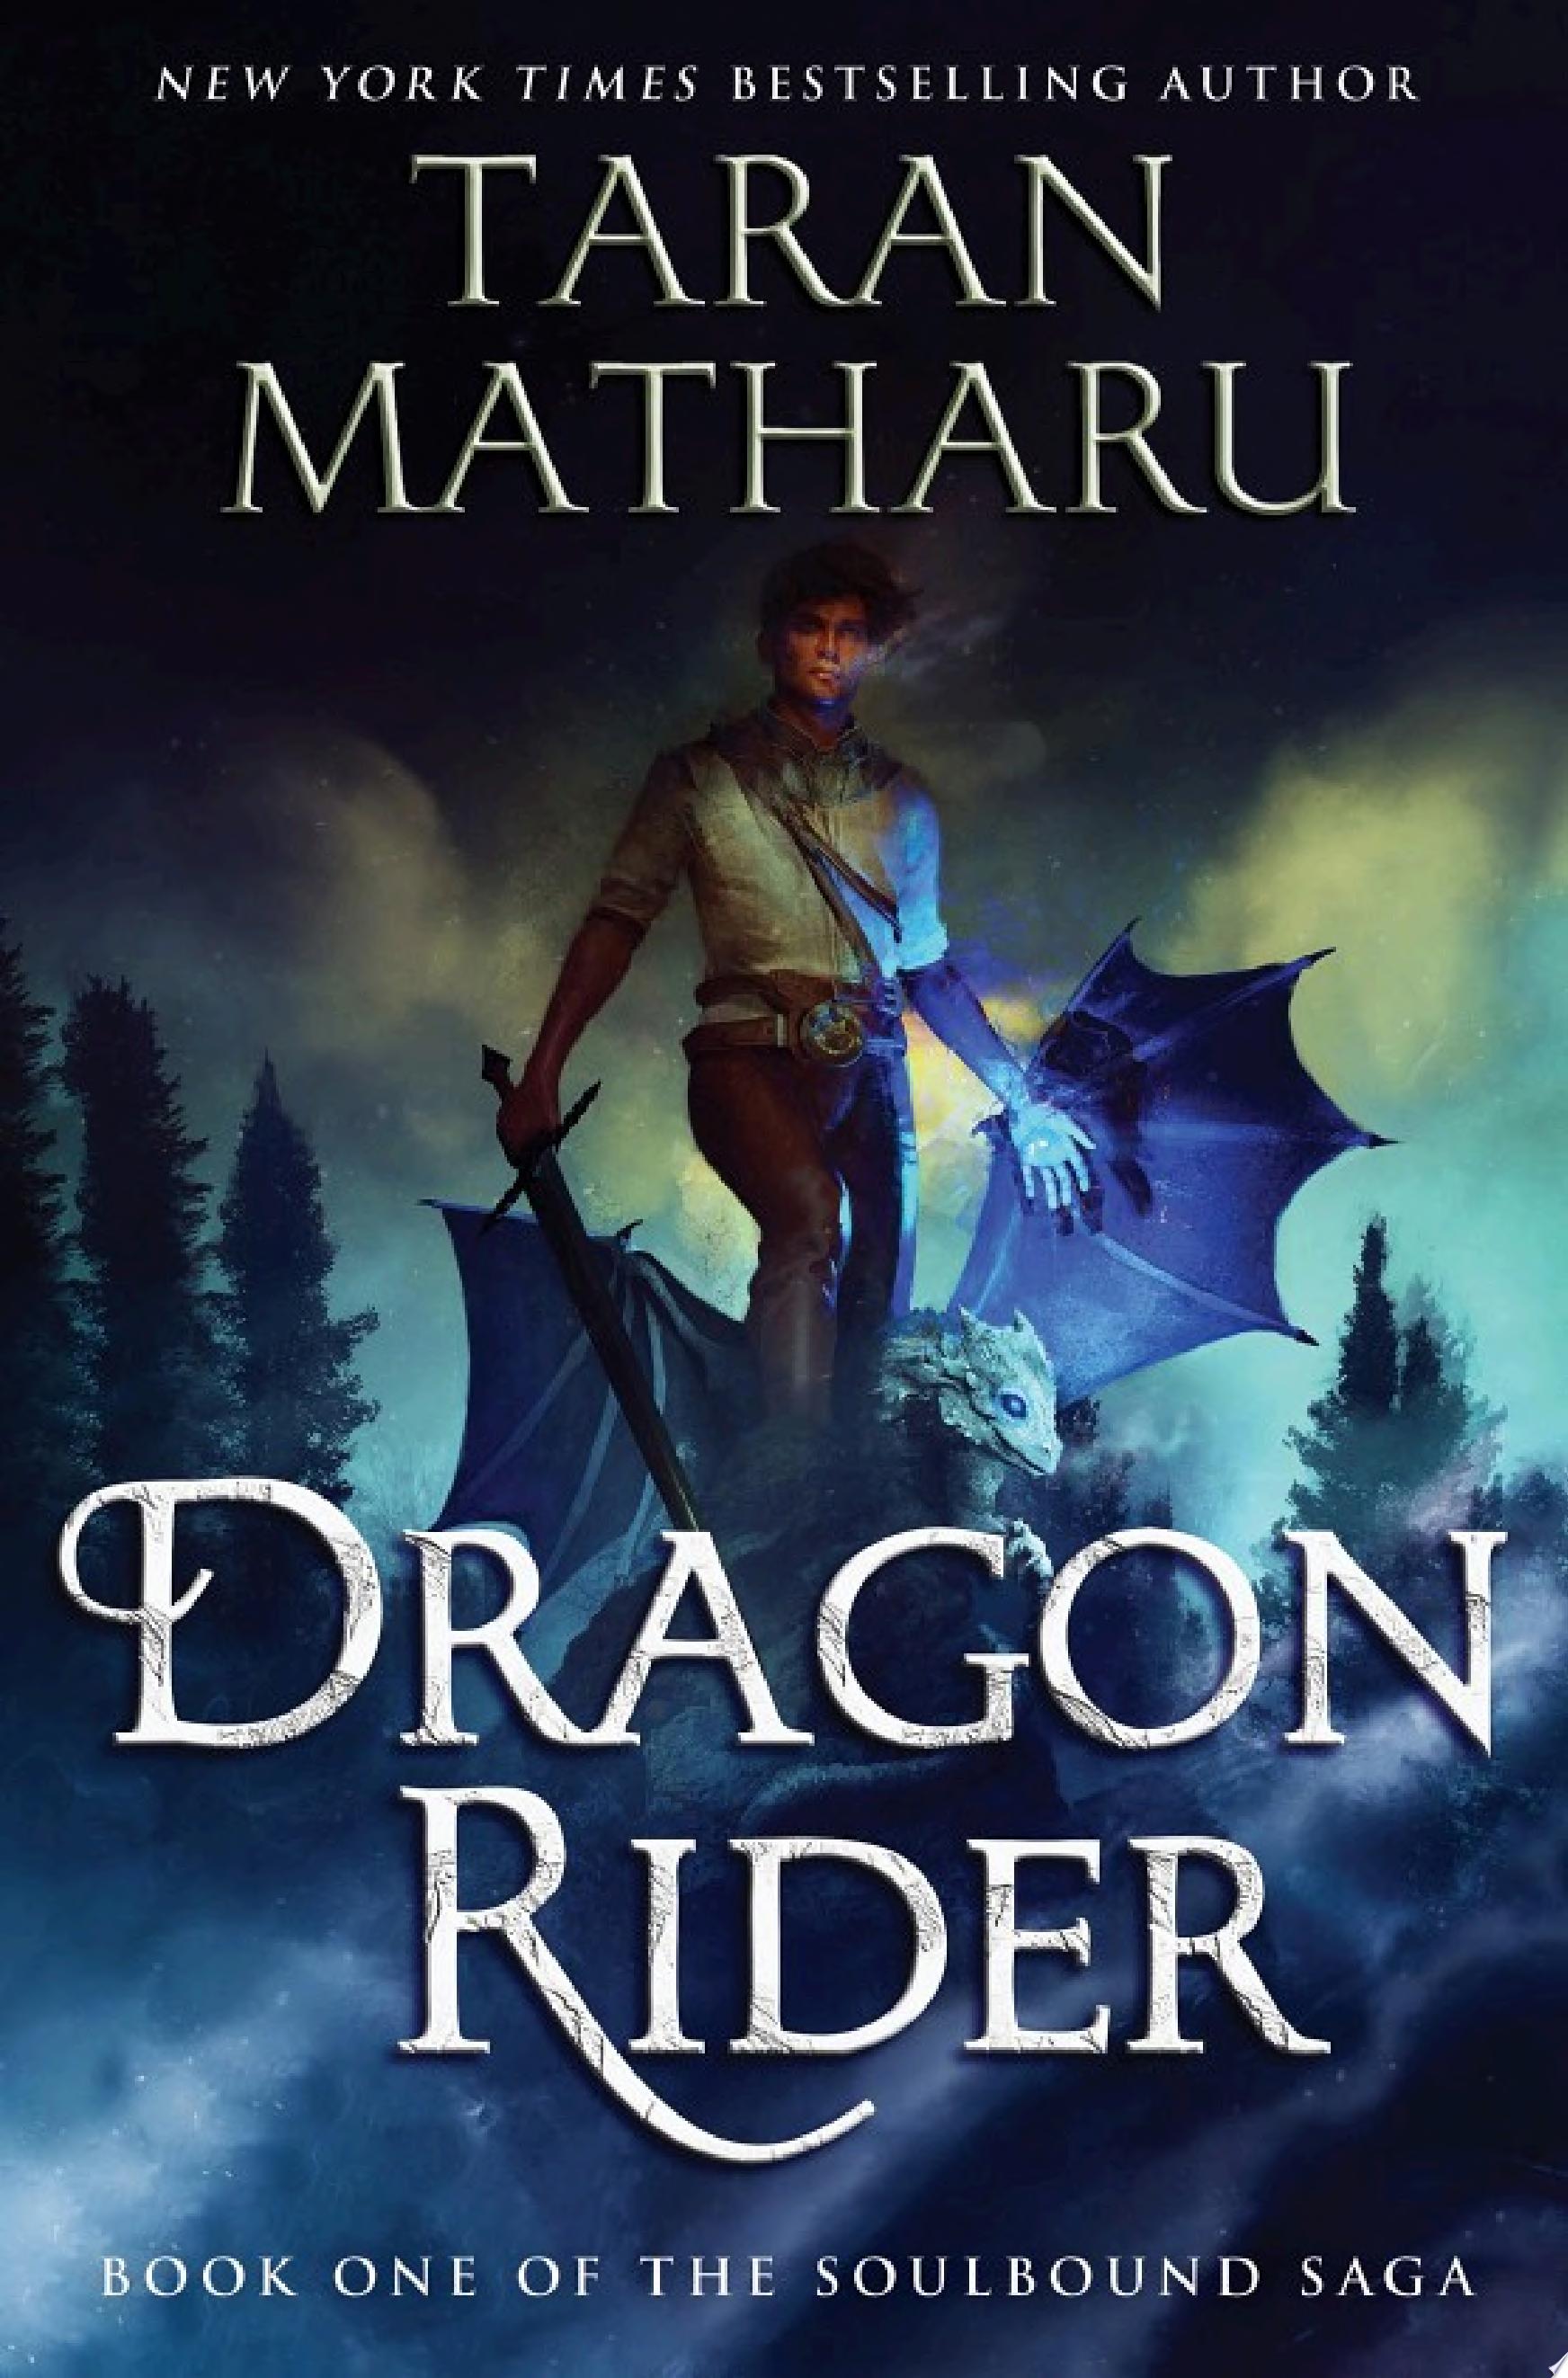 Image for "Dragon Rider"